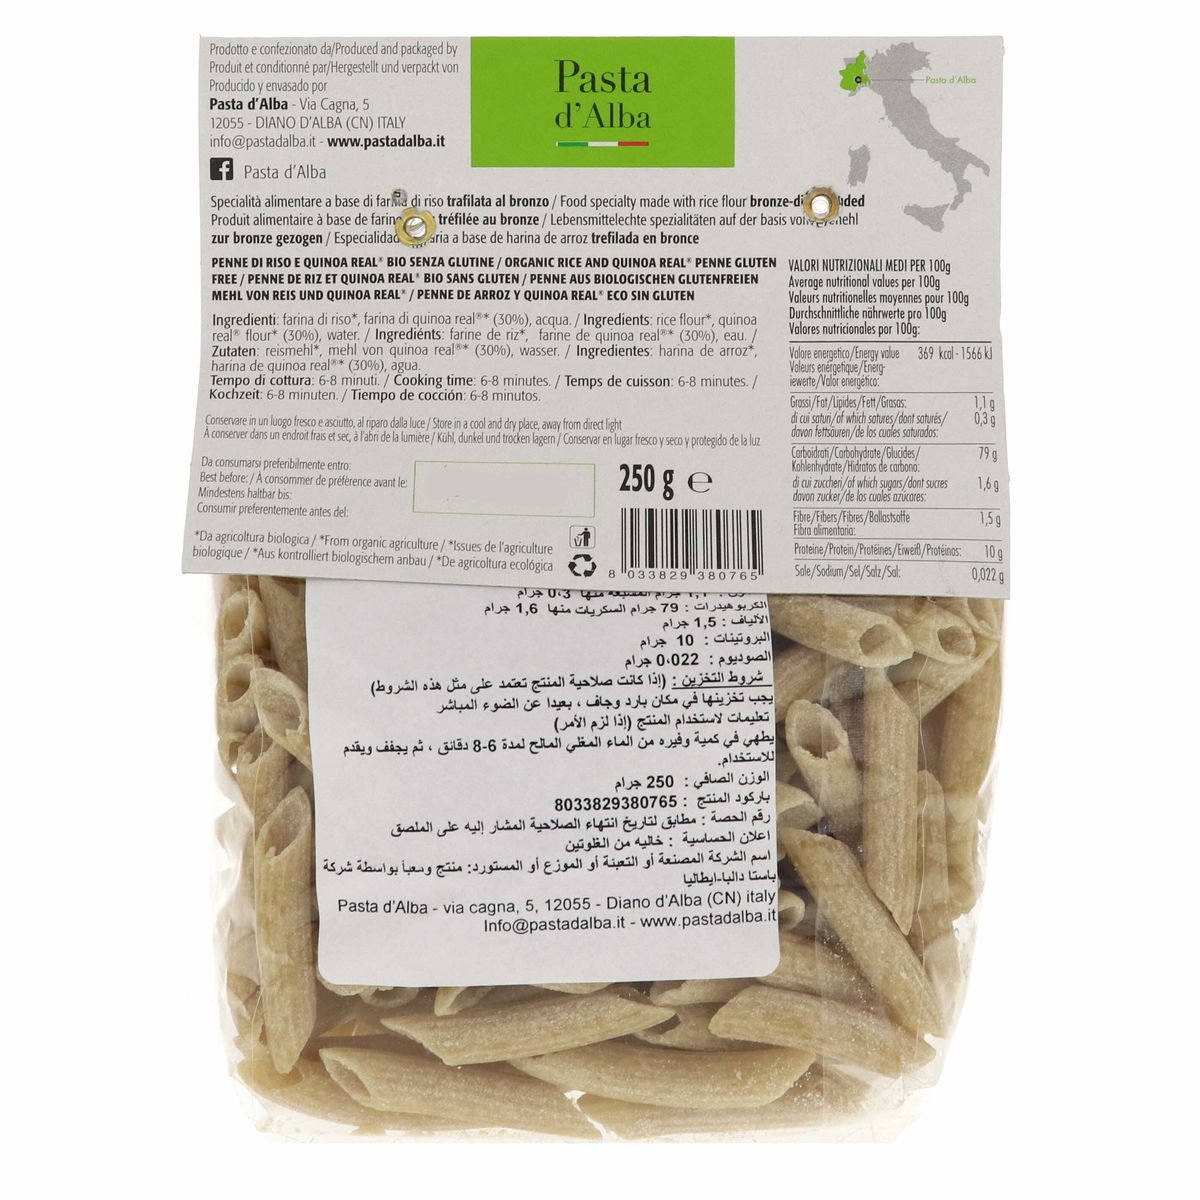 Pasta D' Alba Organic Rice And Quinoa Real 250 g